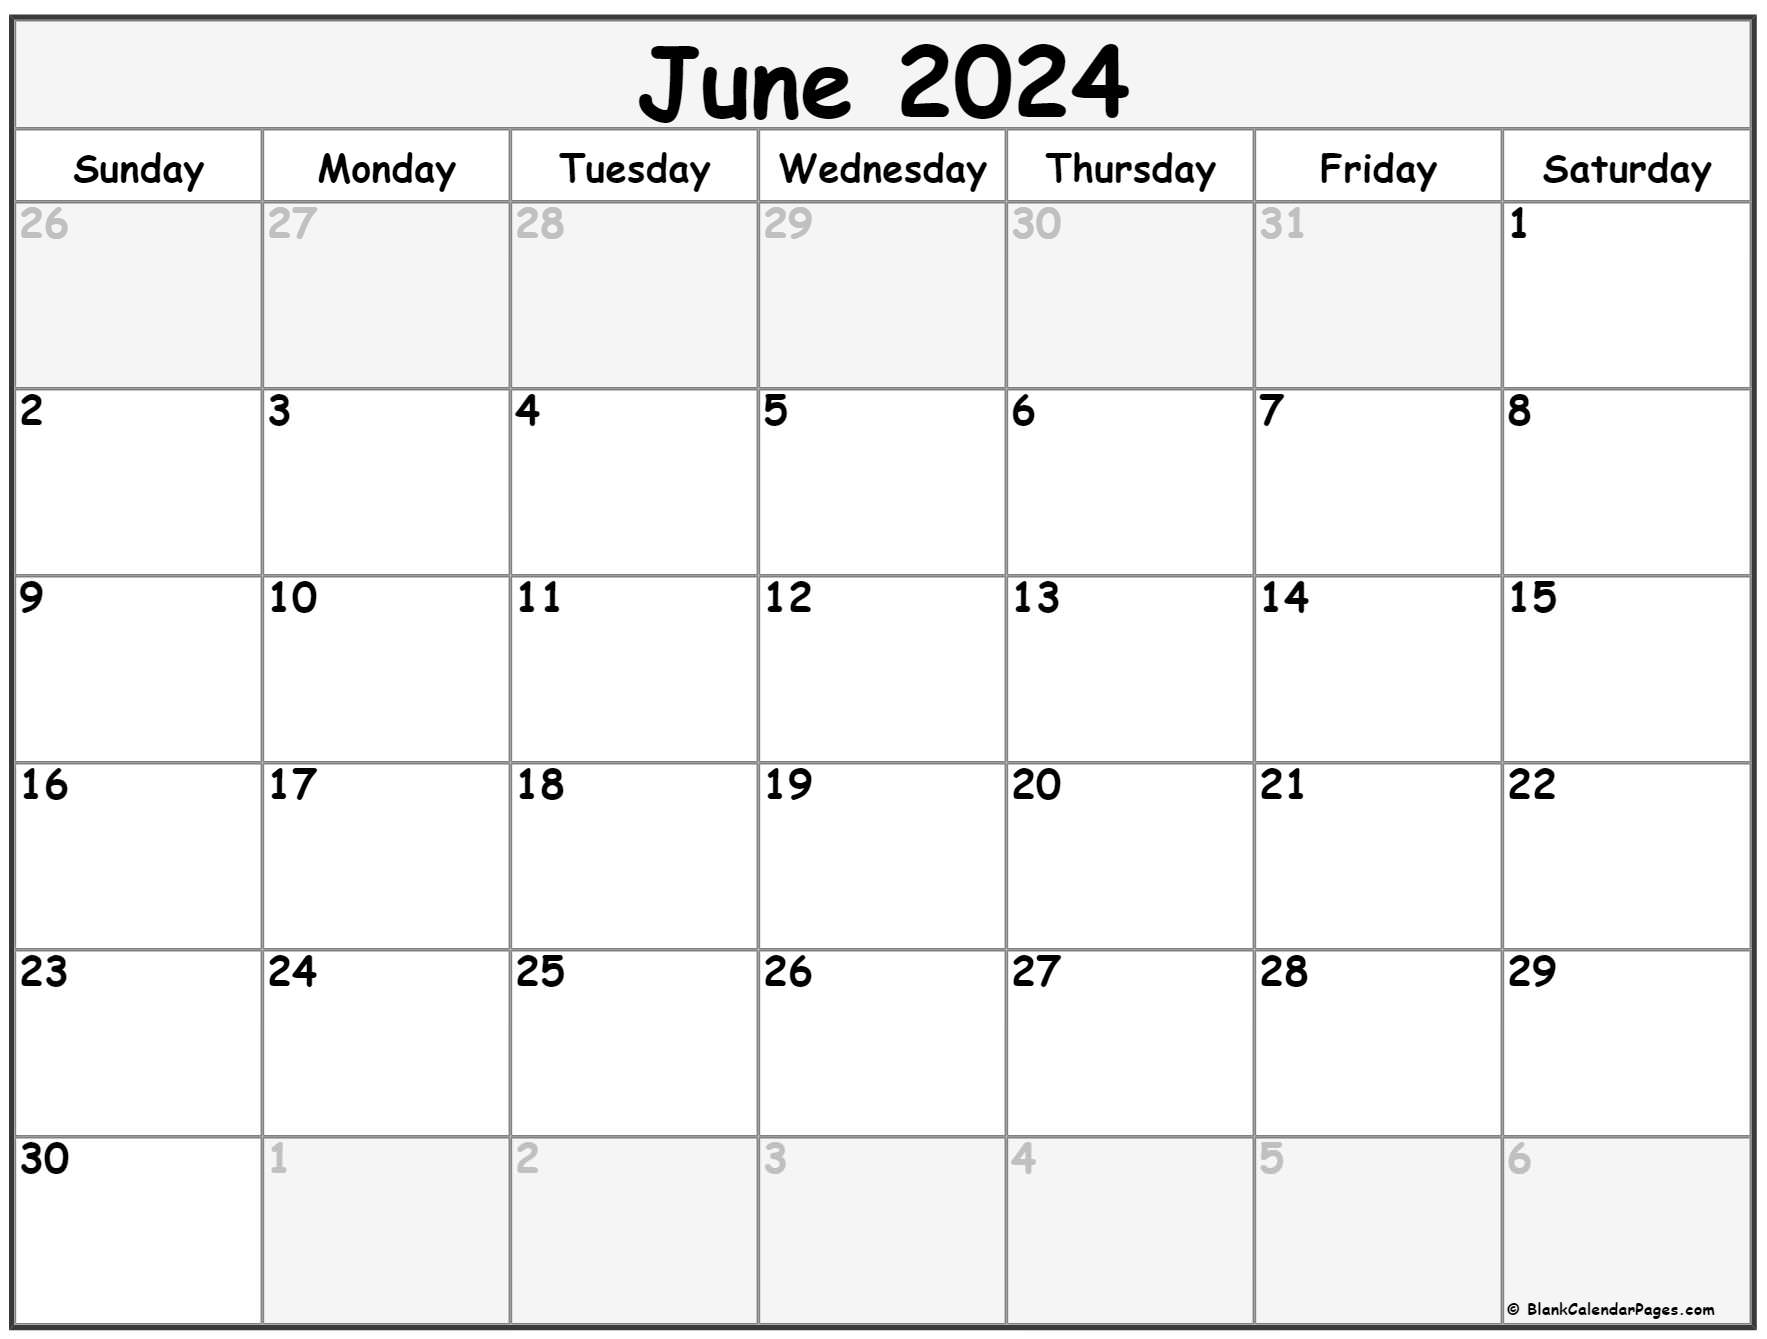 June 2024 Calendar | Free Printable Calendar for 2024 Calendar Printable June